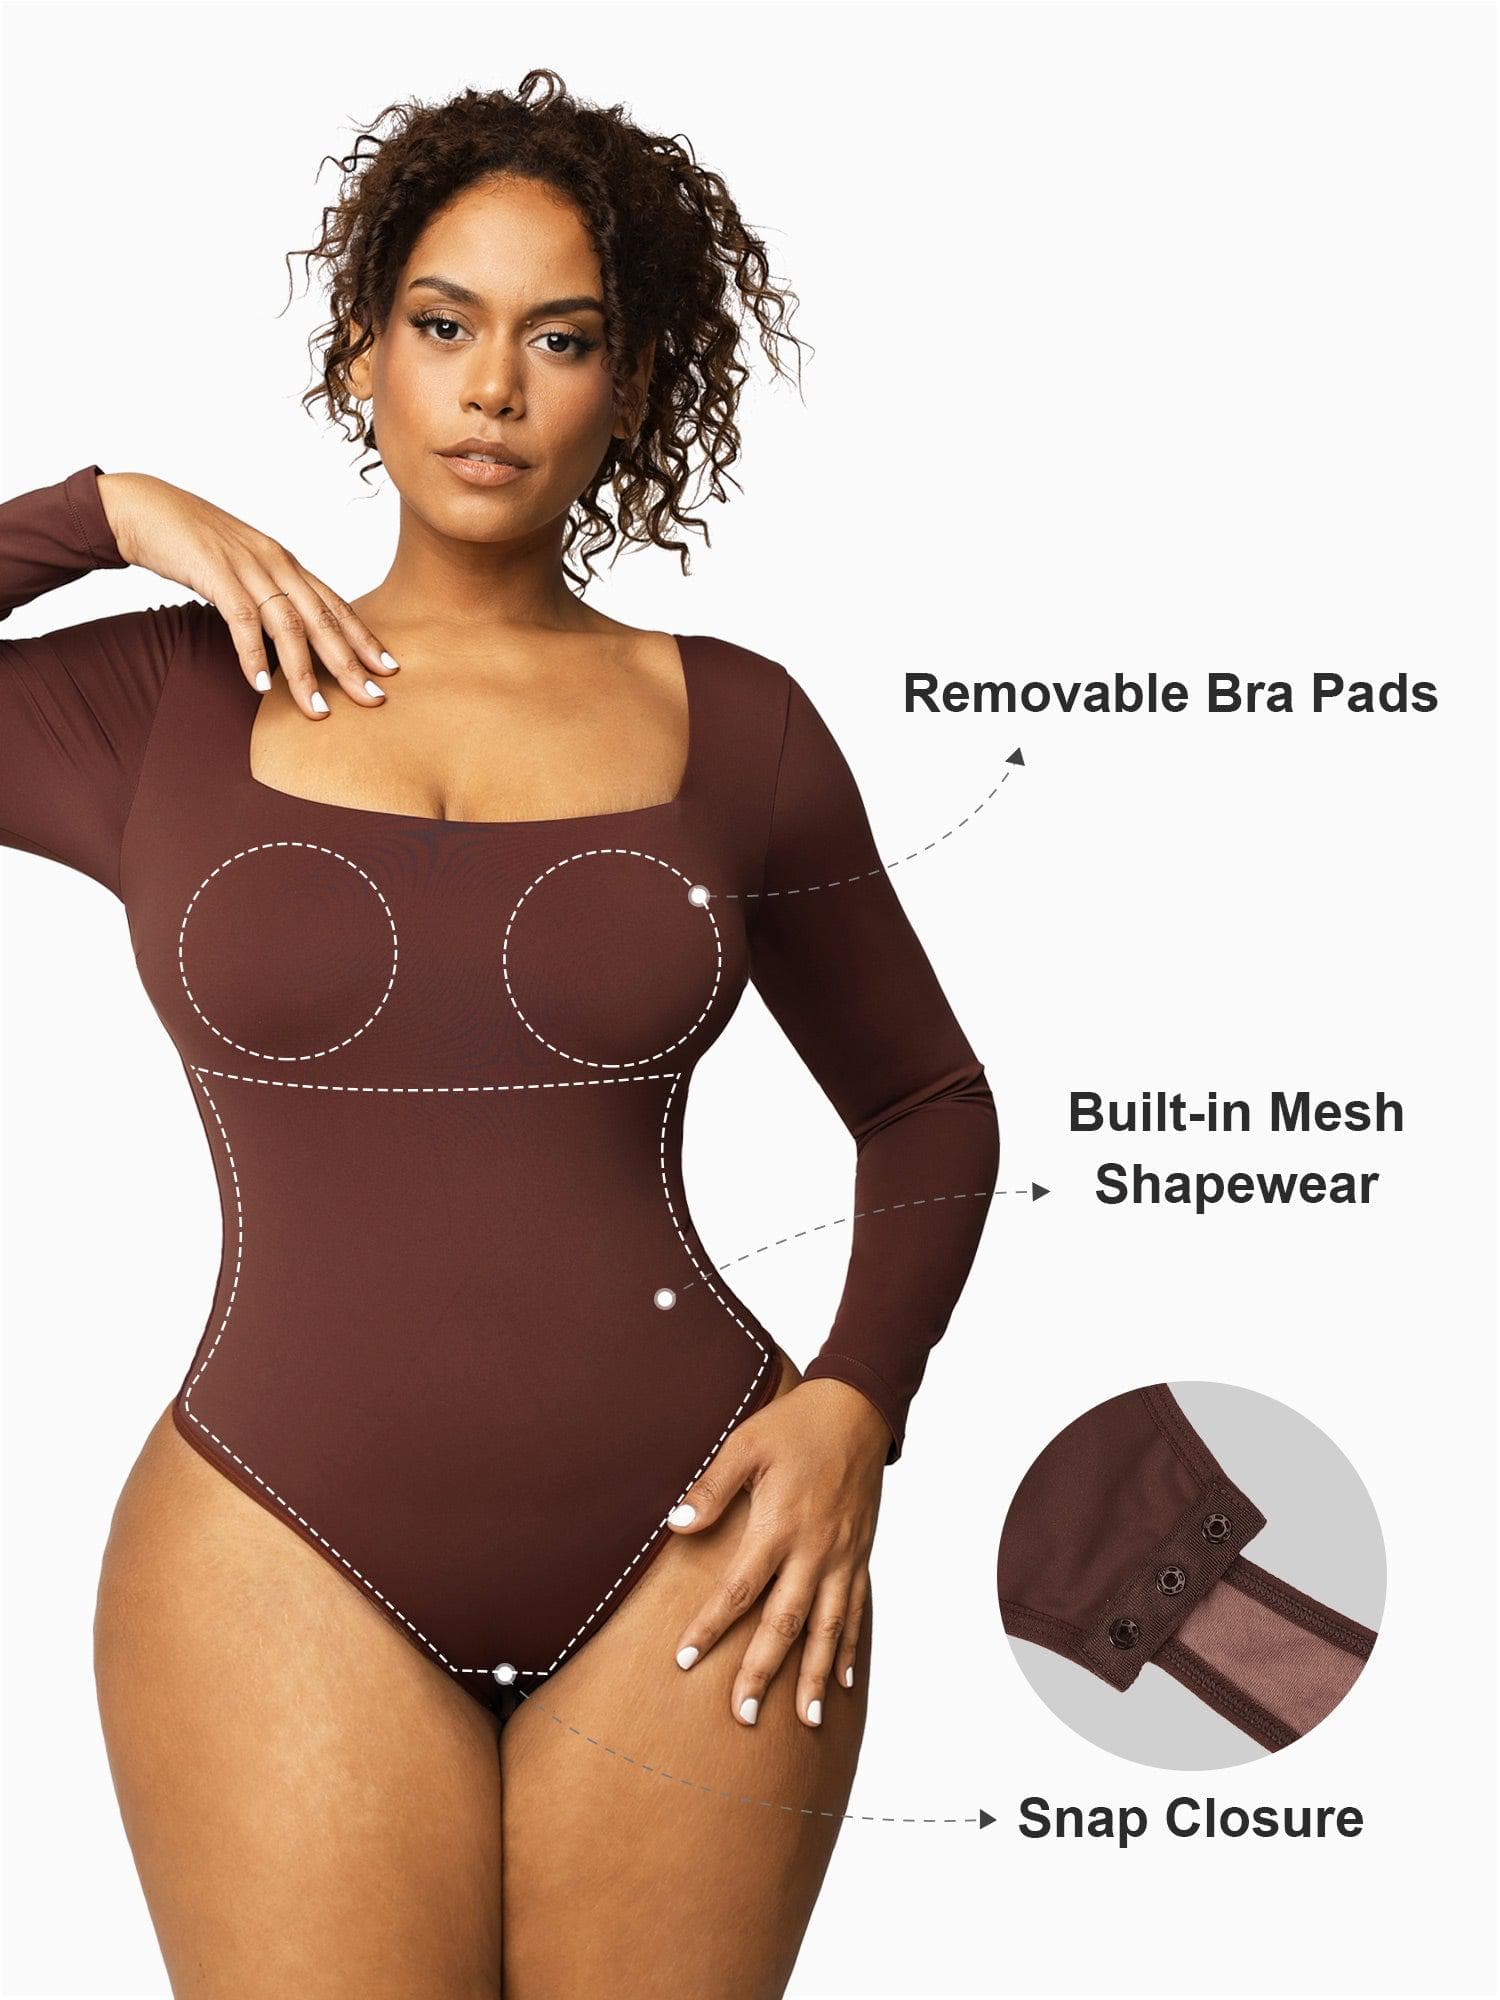 Express NWOT Marble Print Body Contour Bodysuit  Body contouring, High  neck bikinis, Clothes design